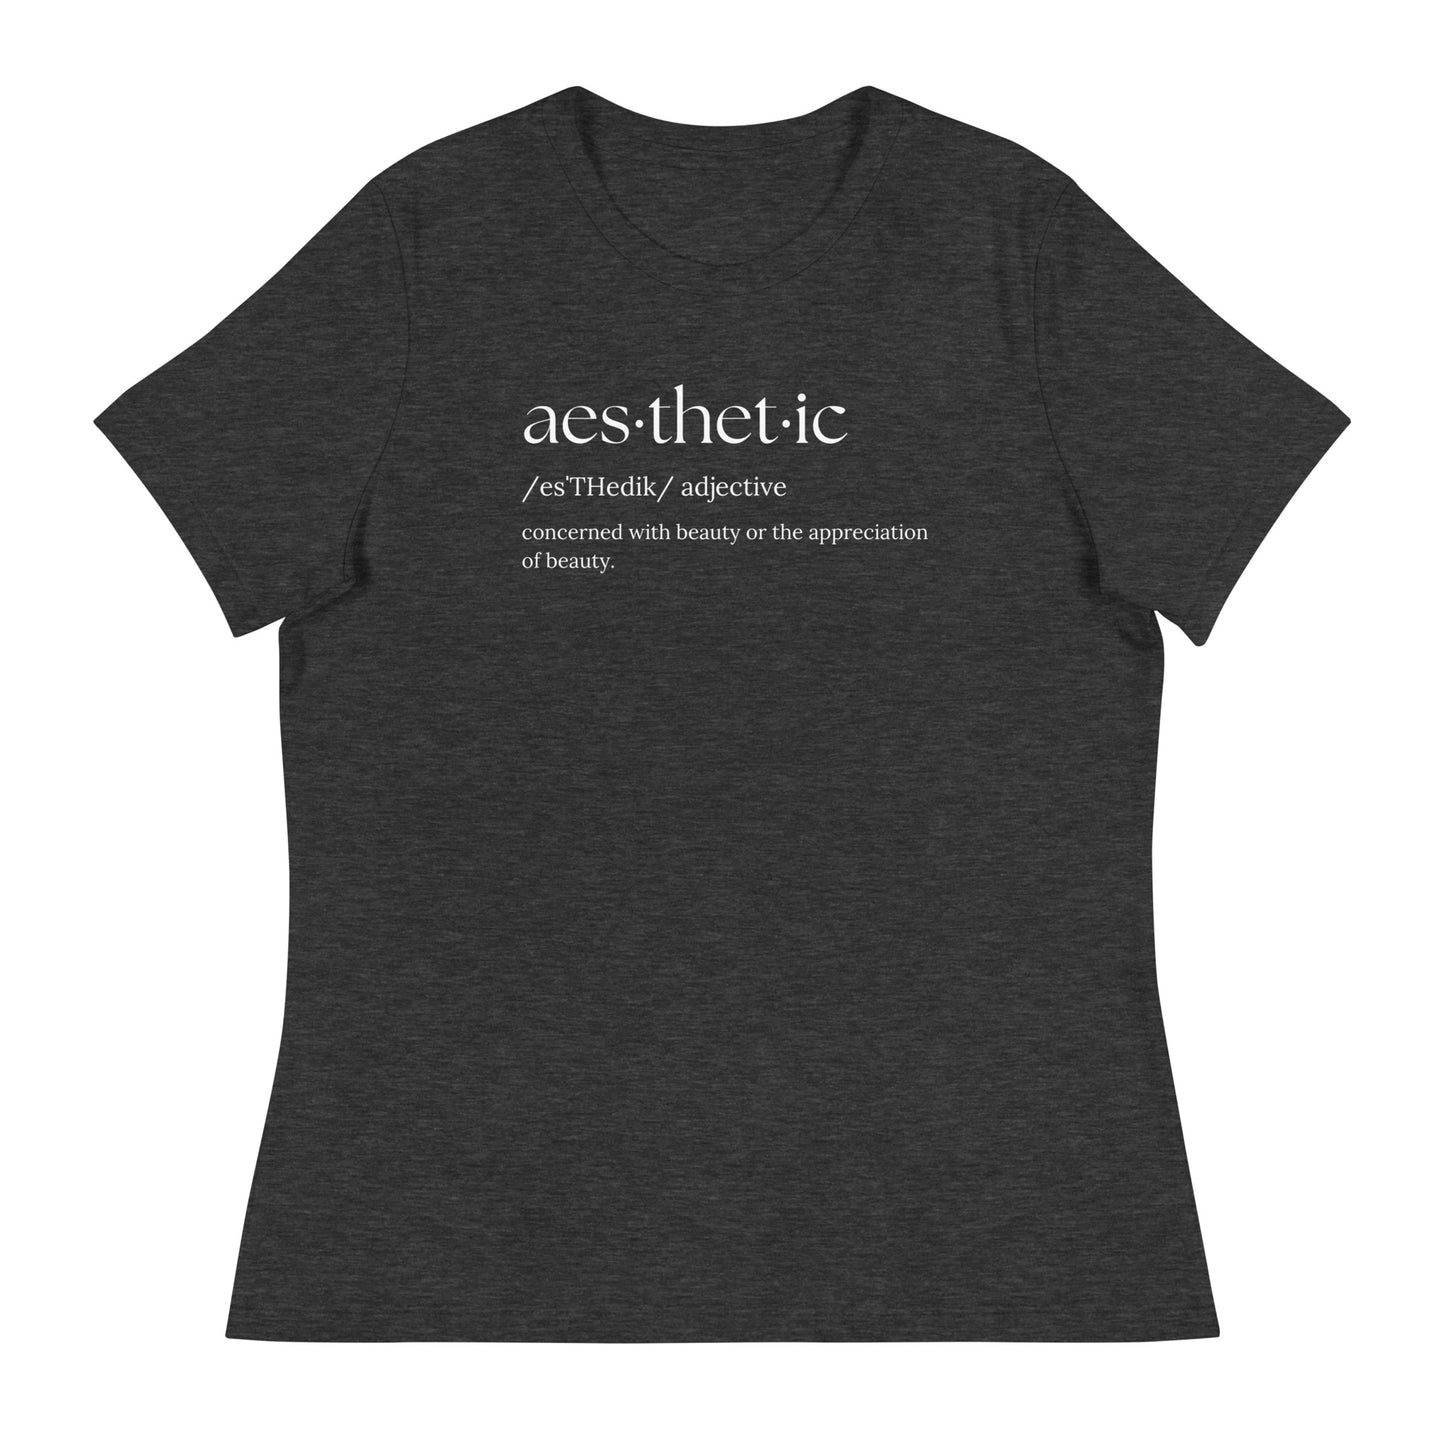 Aesthetic T-Shirt